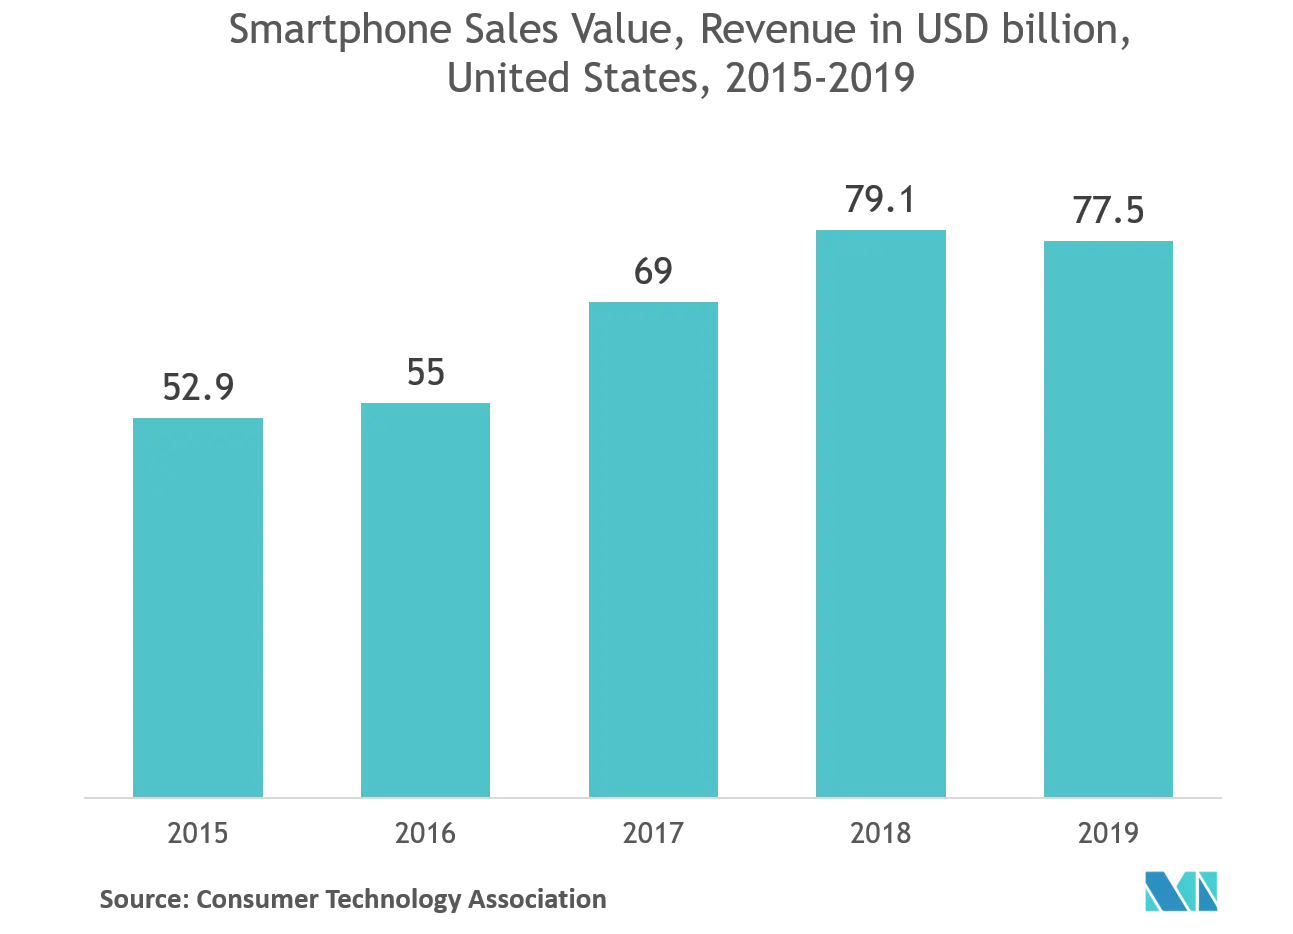 Smart Lock Market: Smartphone Sales Value, Revenue in USD billion, United States, 2015-2019